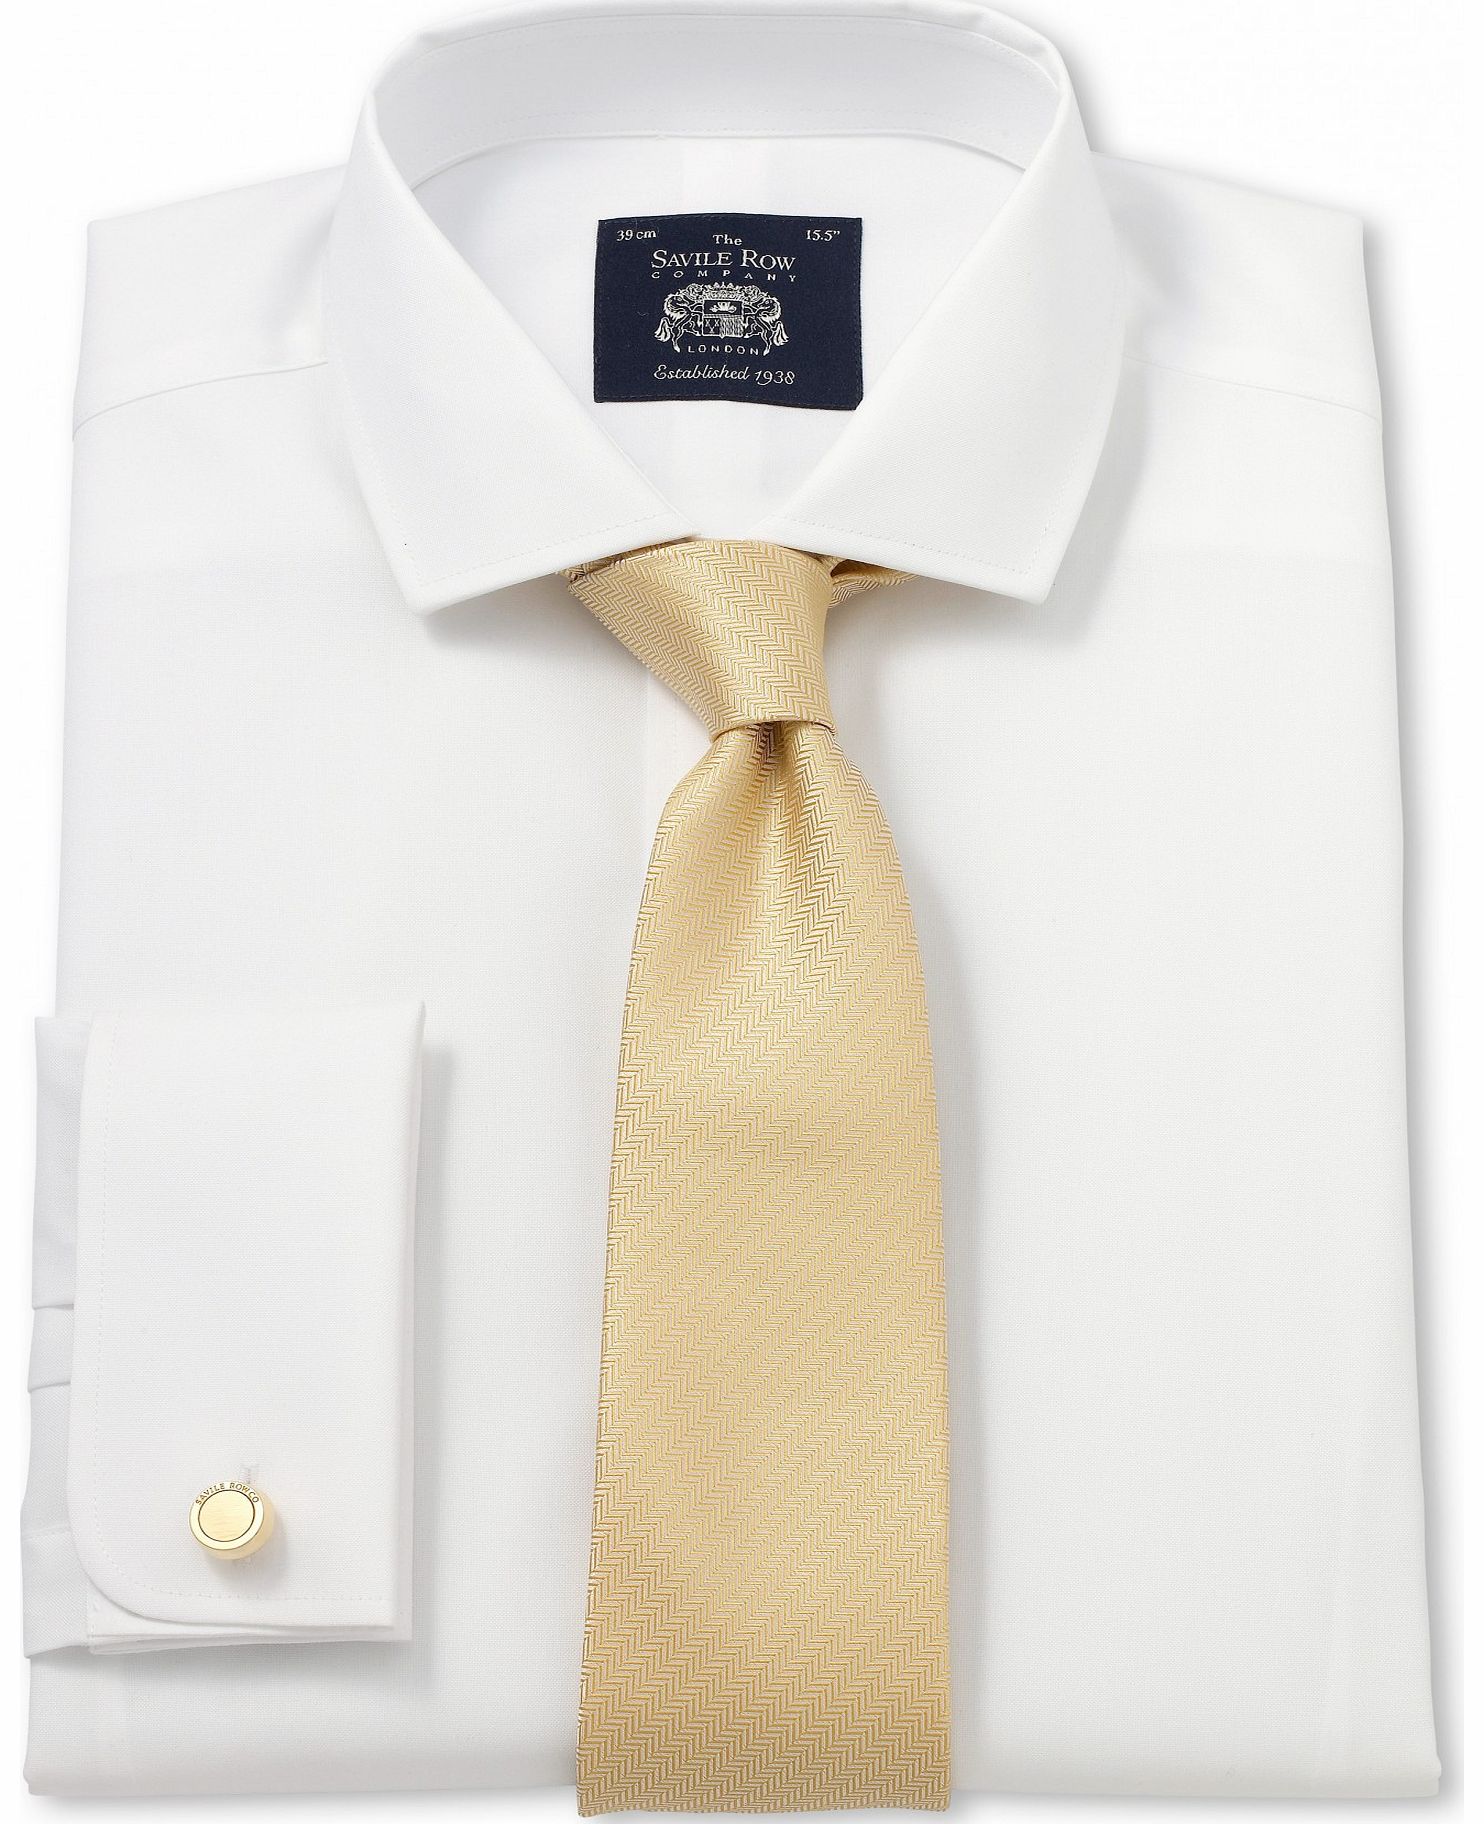 Savile Row Company White Poplin Non Iron Extra Slim Fit Shirt 16